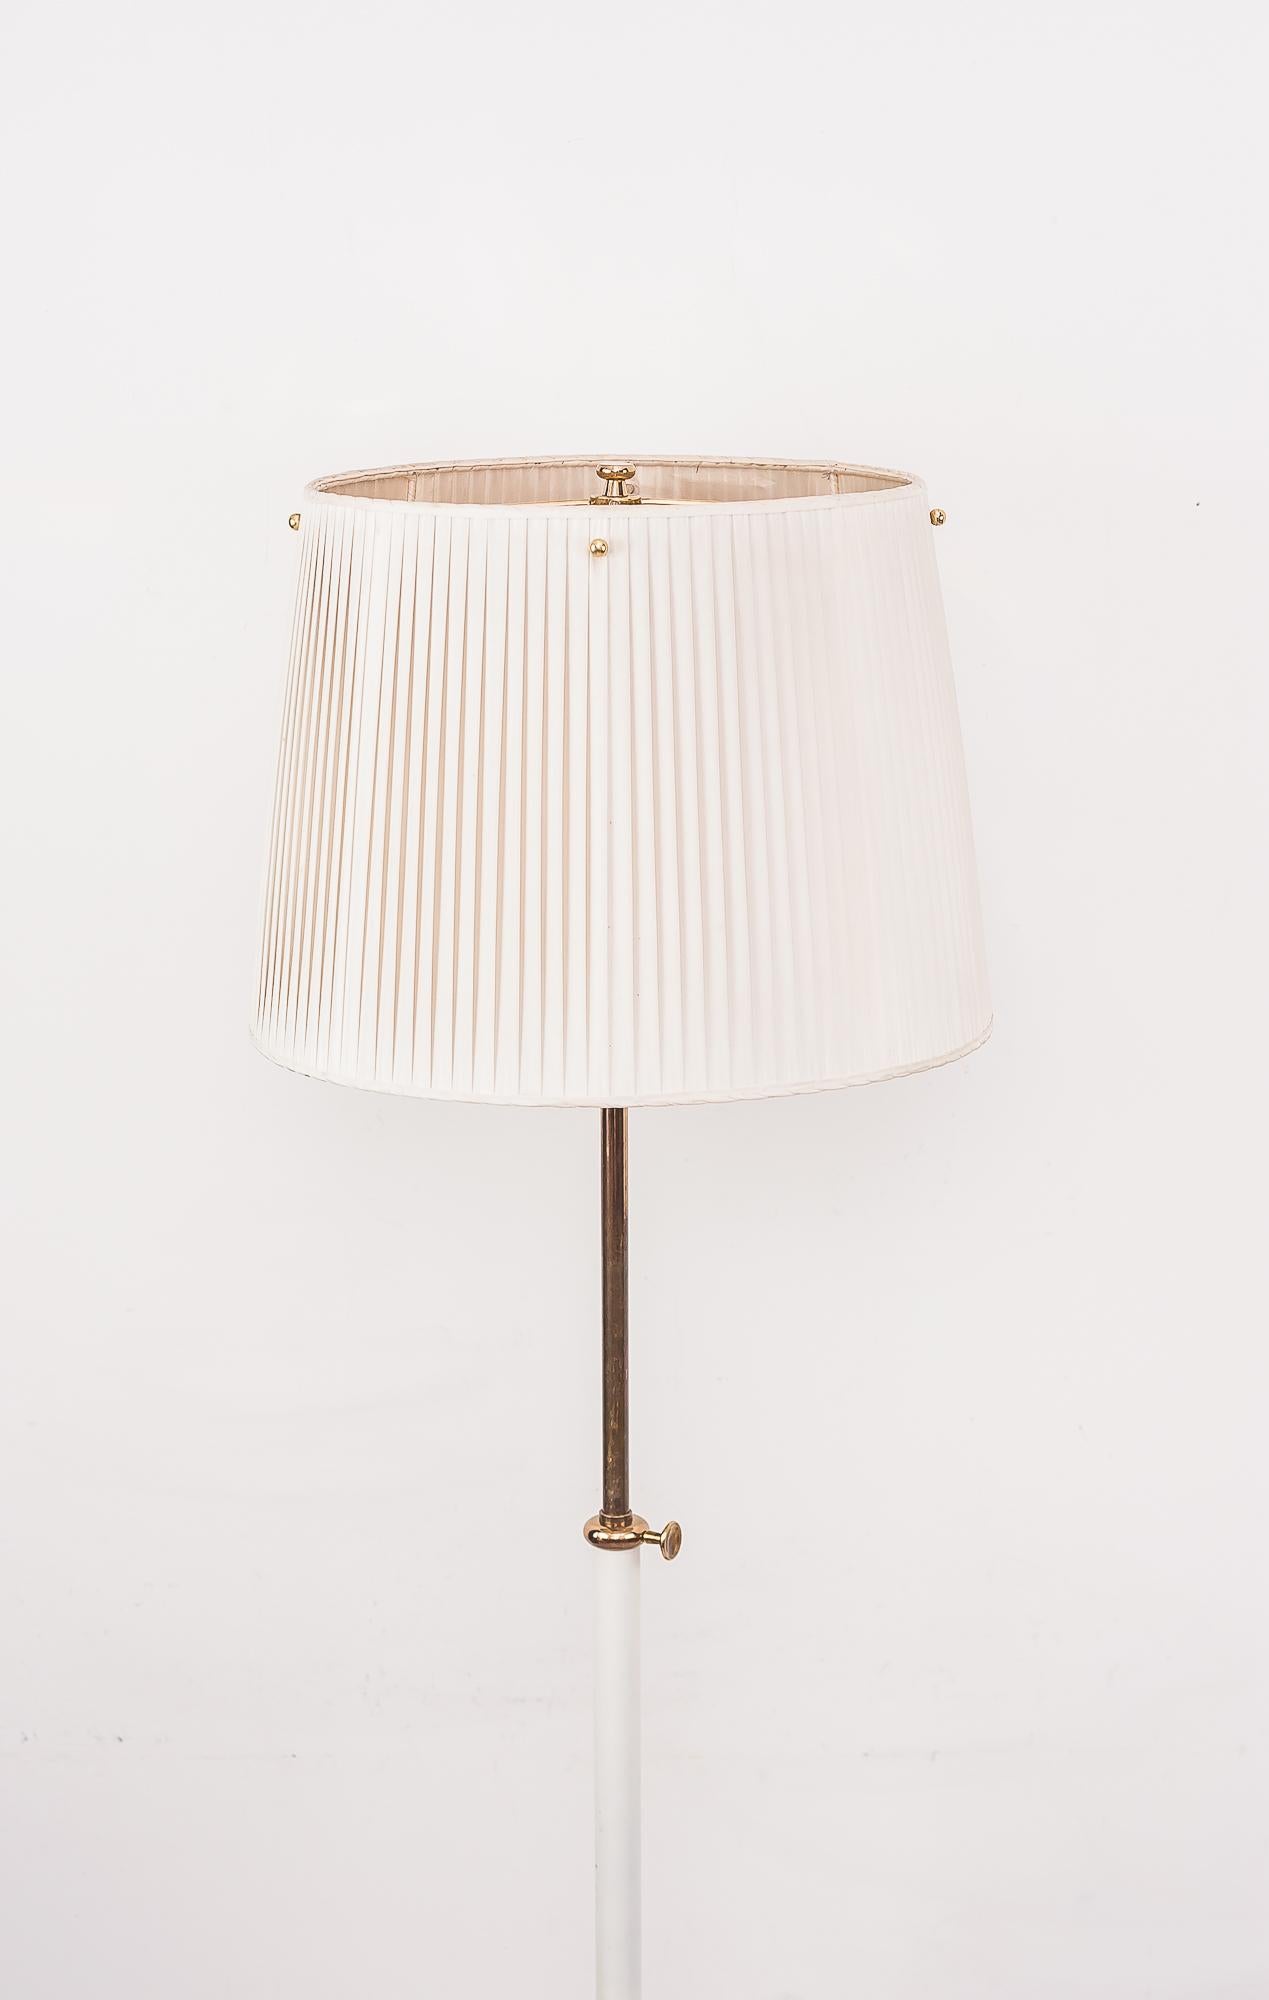 Mid-Century Modern Adjustable Floor Lamp by Josef Frank for Svenskt Tenn, Sweden, 1950s